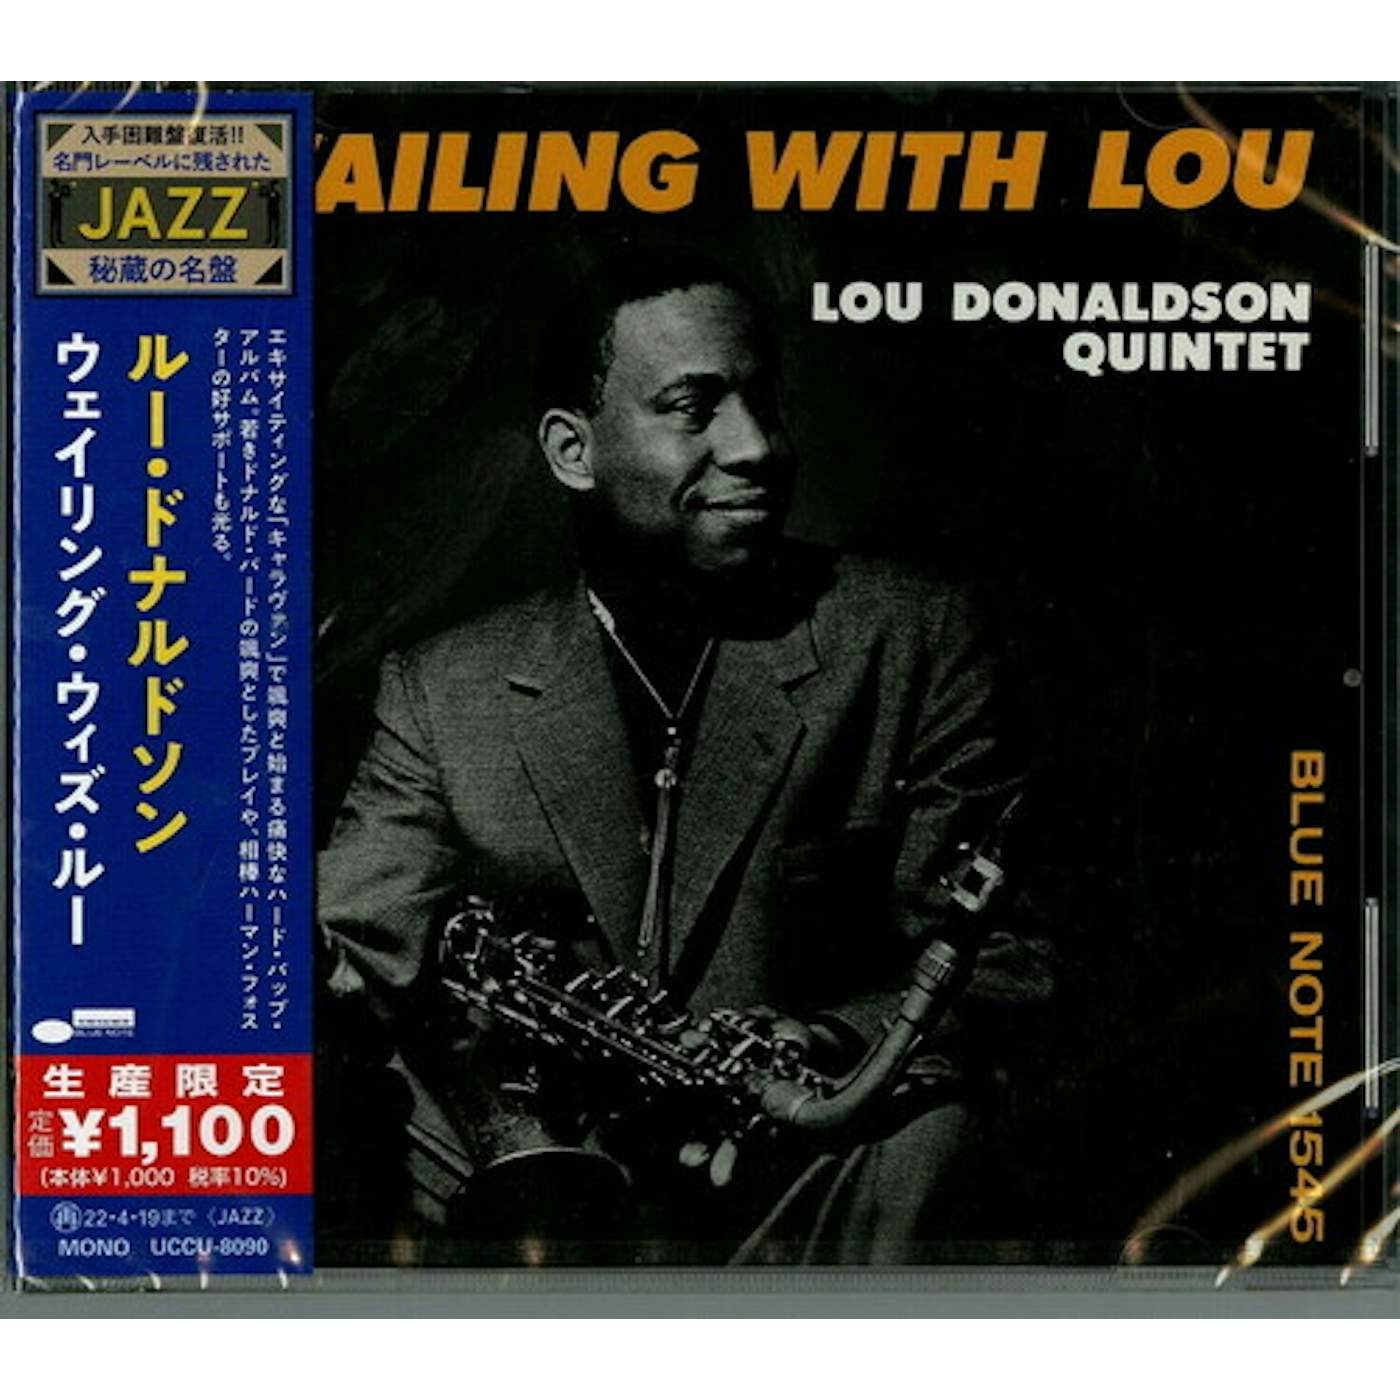 Lou Donaldson WAILING WITH LOU CD